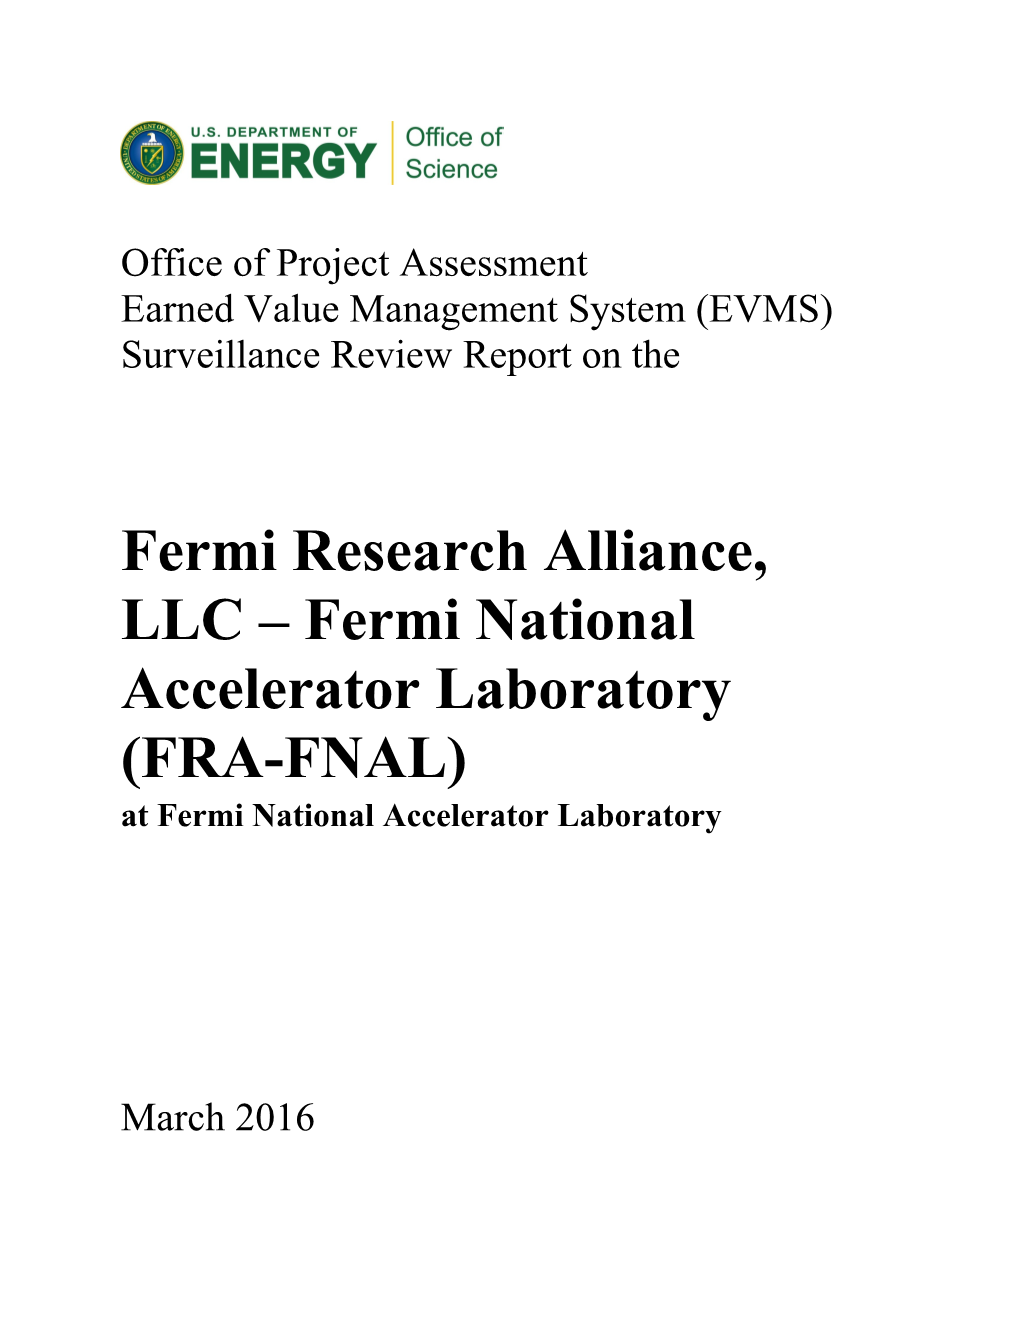 Fermi Research Alliance, LLC Fermi National Accelerator Laboratory (FRA-FNAL)